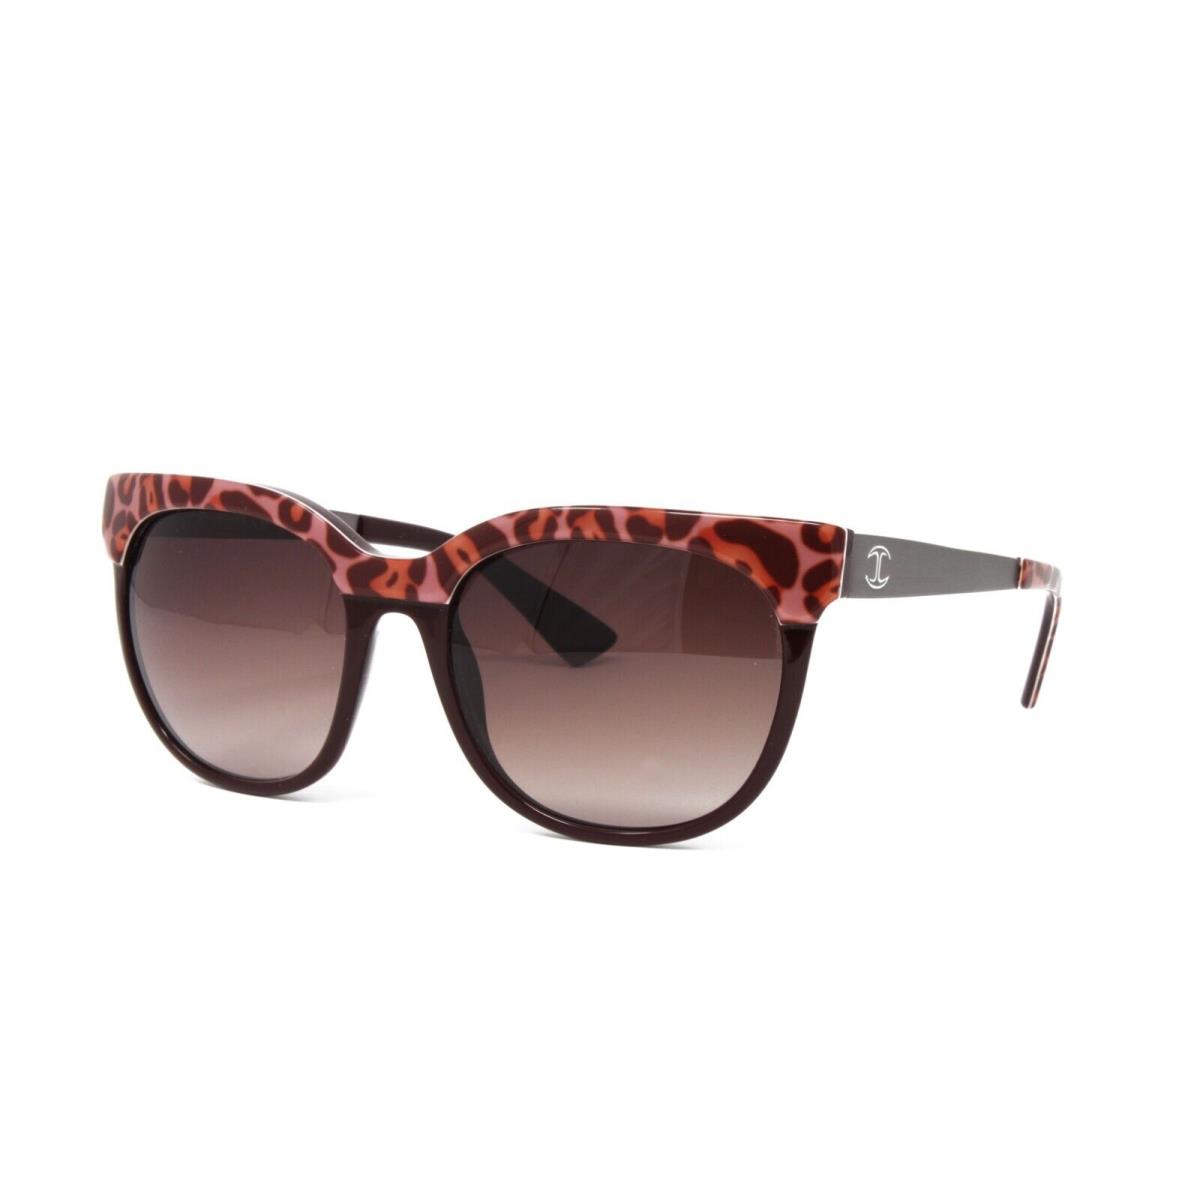 Just Cavalli Women`s Sunglasses JC501S 71F Burgundy 54mm Brown Gradient Lens - Red Frame, Brown Lens